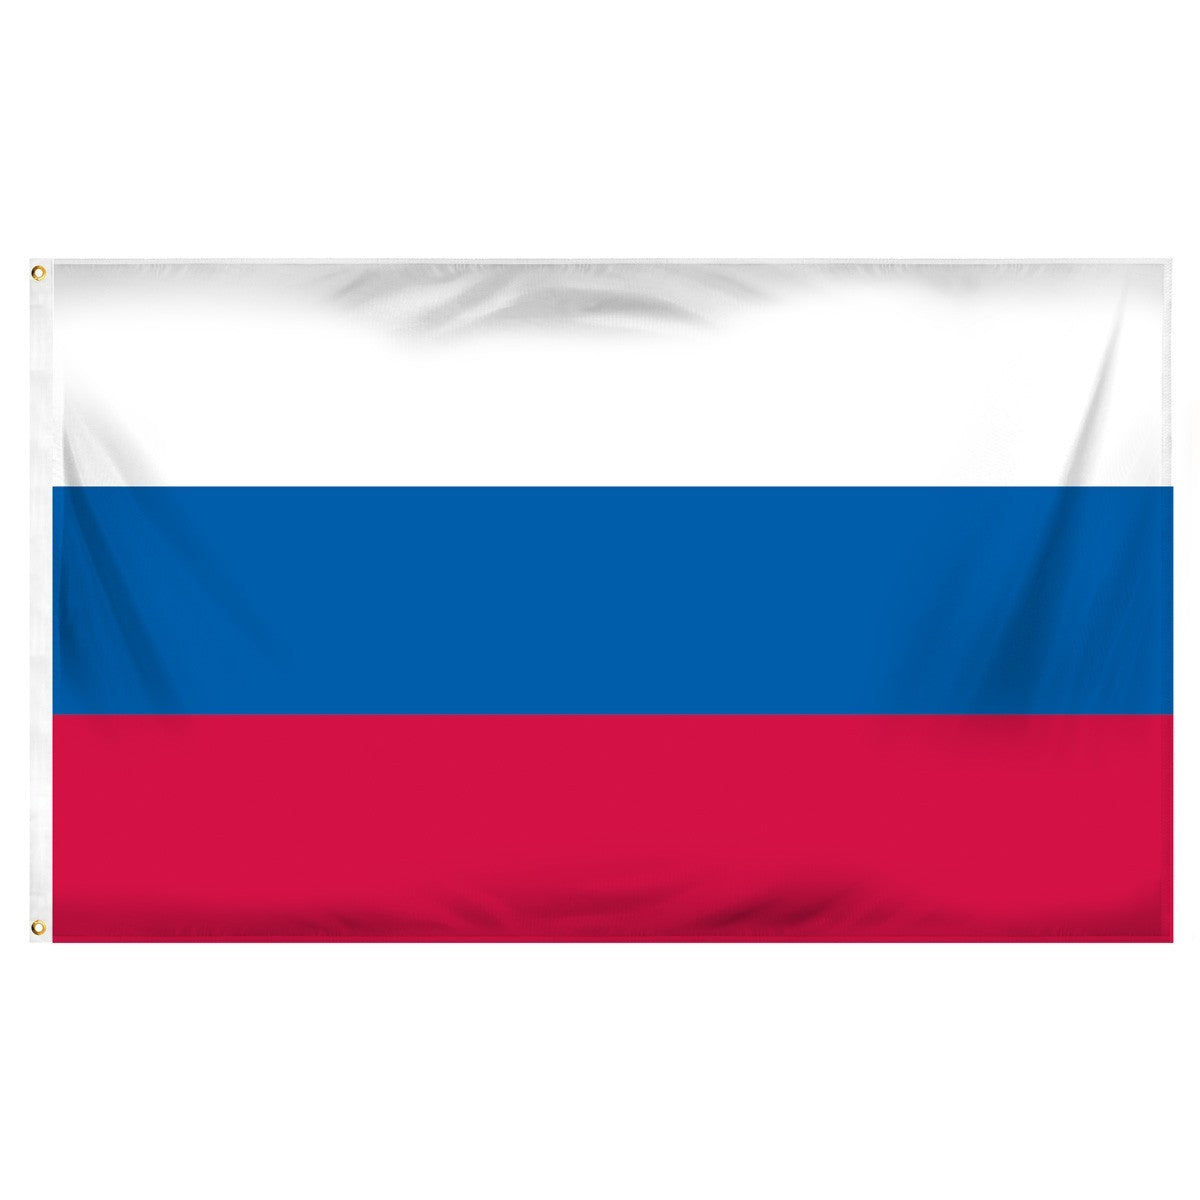 Bandera de poliéster interior de Rusia de 2 pies x 3 pies